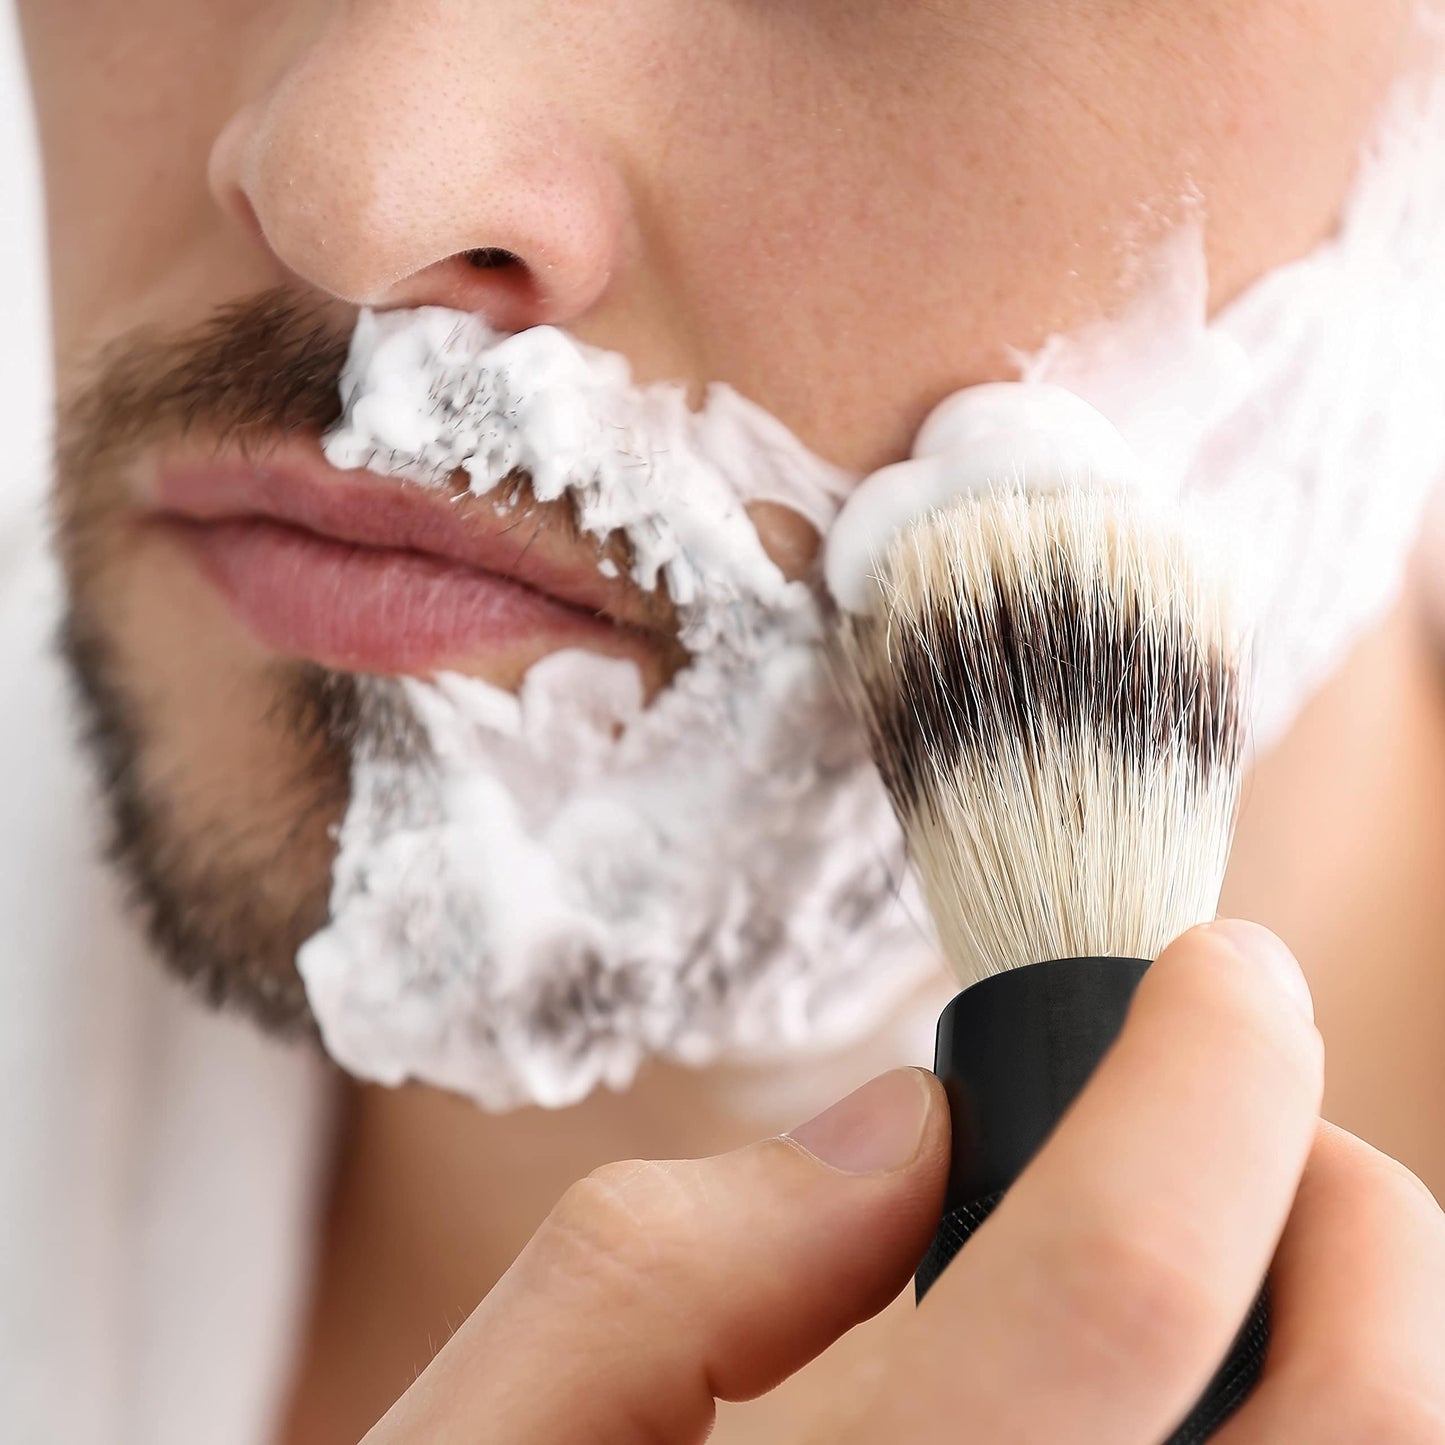 Synthetic Shaving Brush Black | Best Ingrown Hair Treatment | Wet Shaving Brush Shave Brush| Shaving Brush Metal Handle | Your Razor Bump Treatment | Bambaw